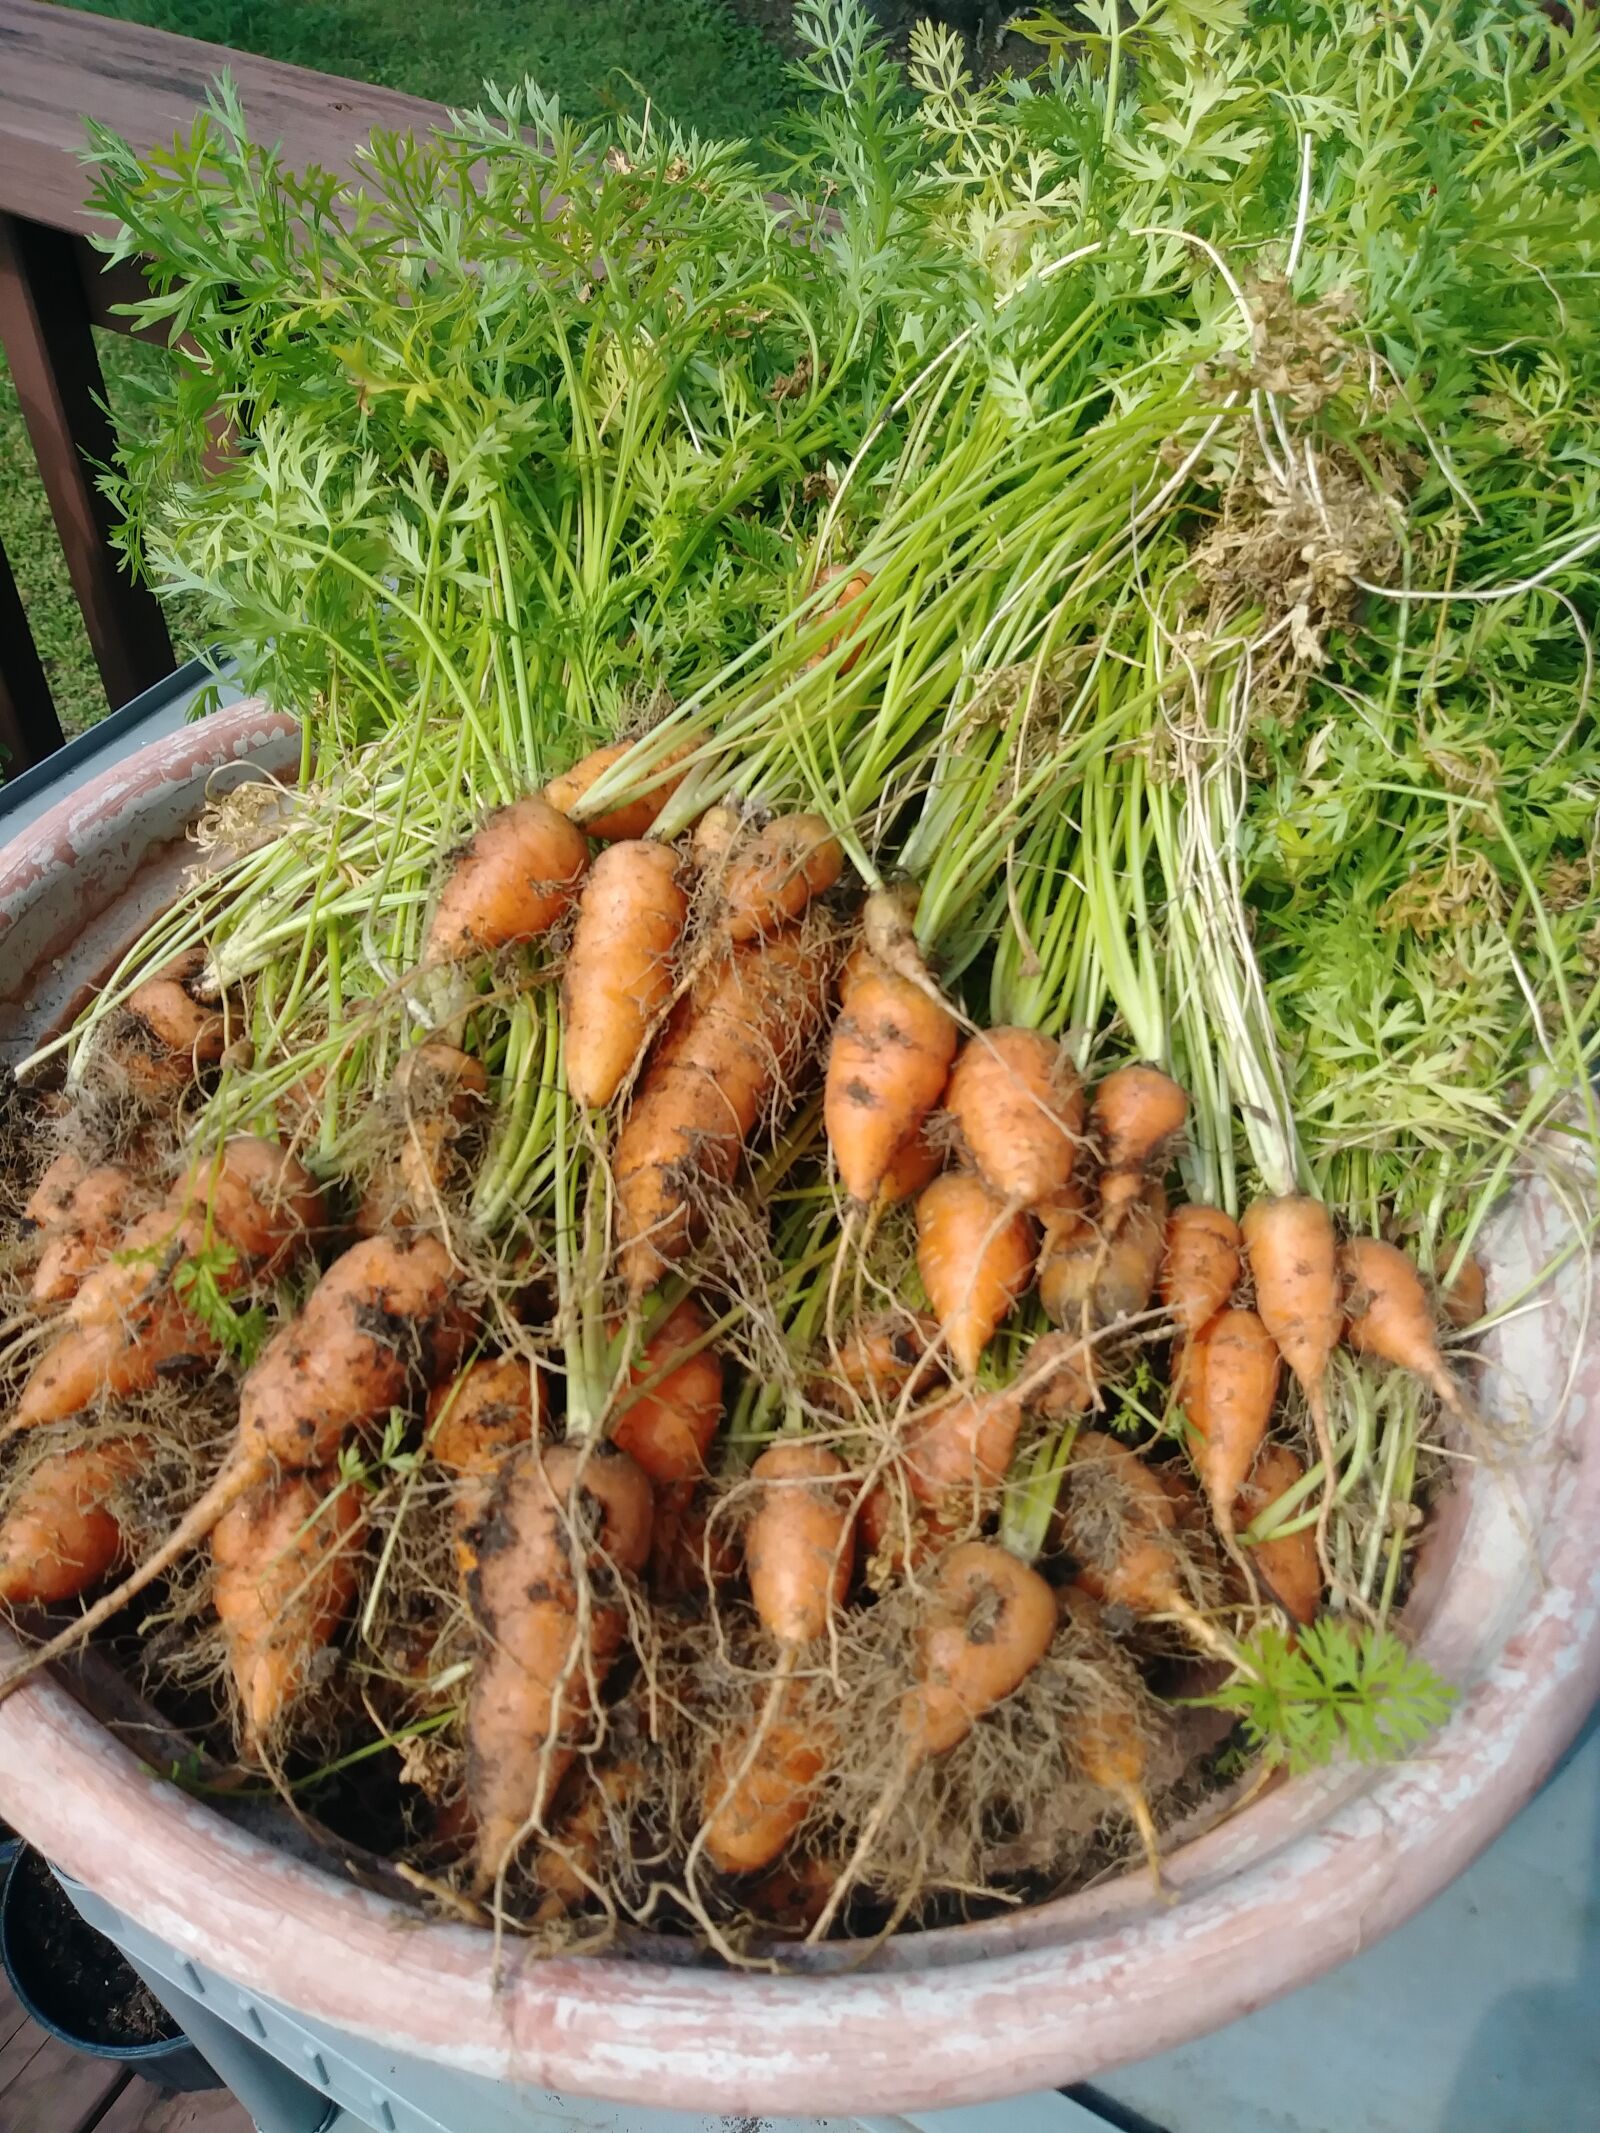 LG STYLO 3 PLUS sample photo. Carrots, harvest, food photography